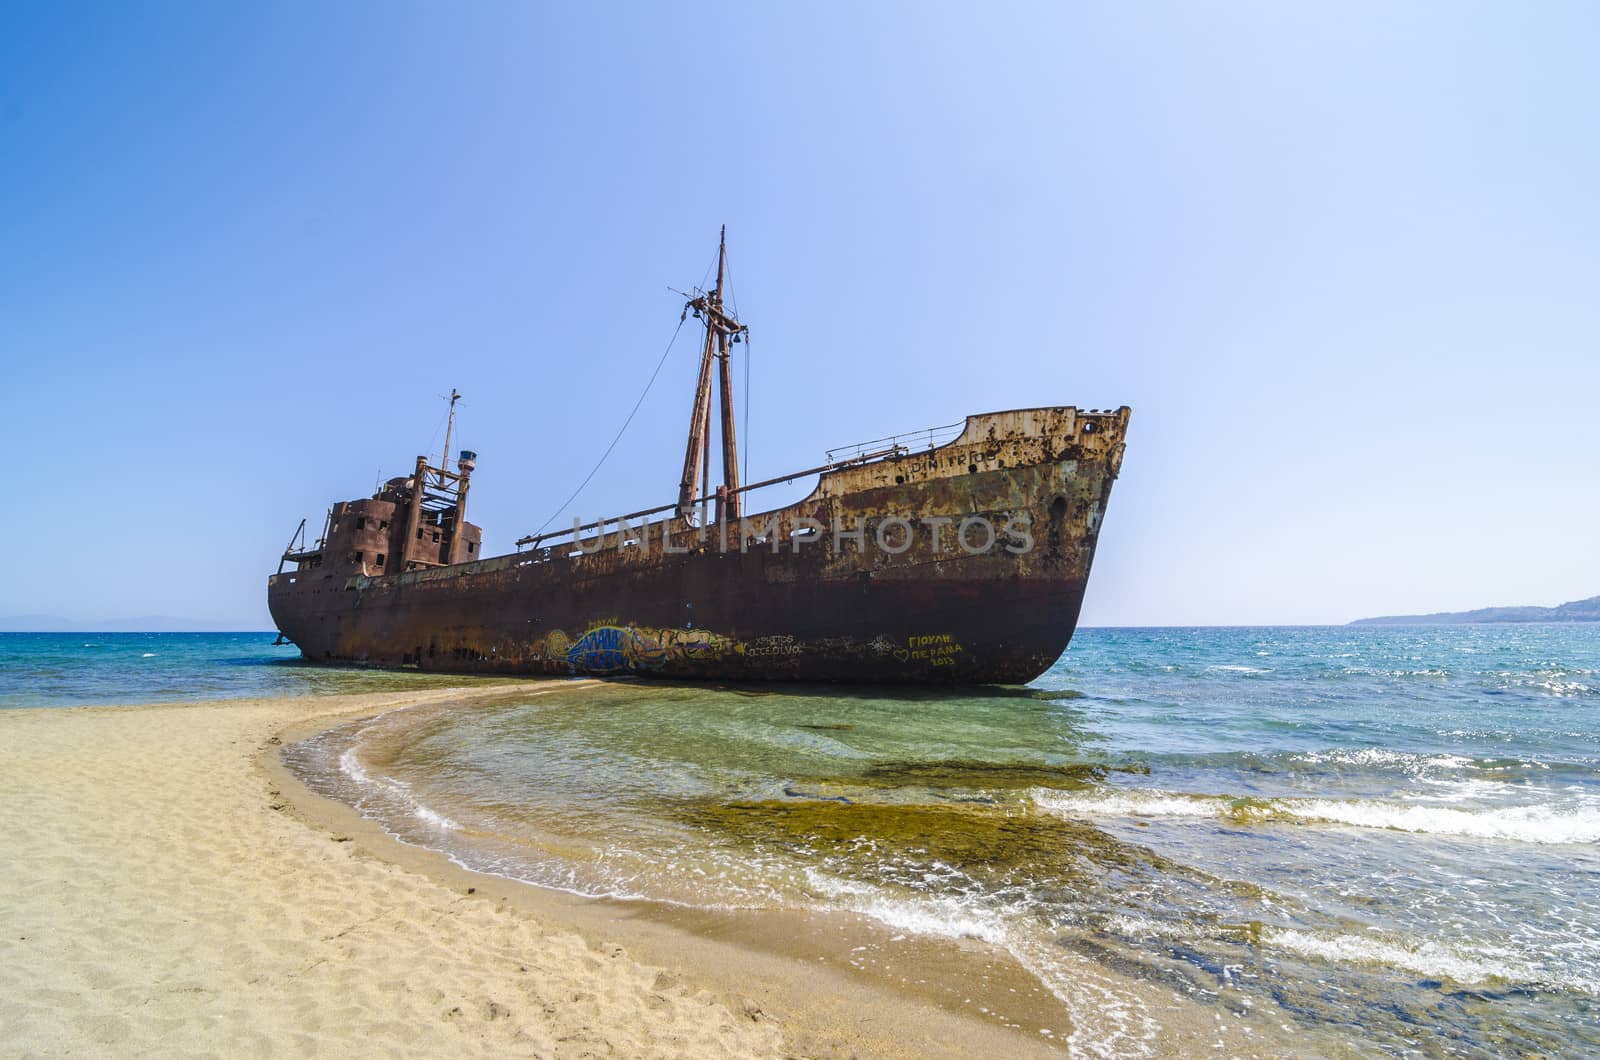 Gytheio shipwreck by Anzemulec